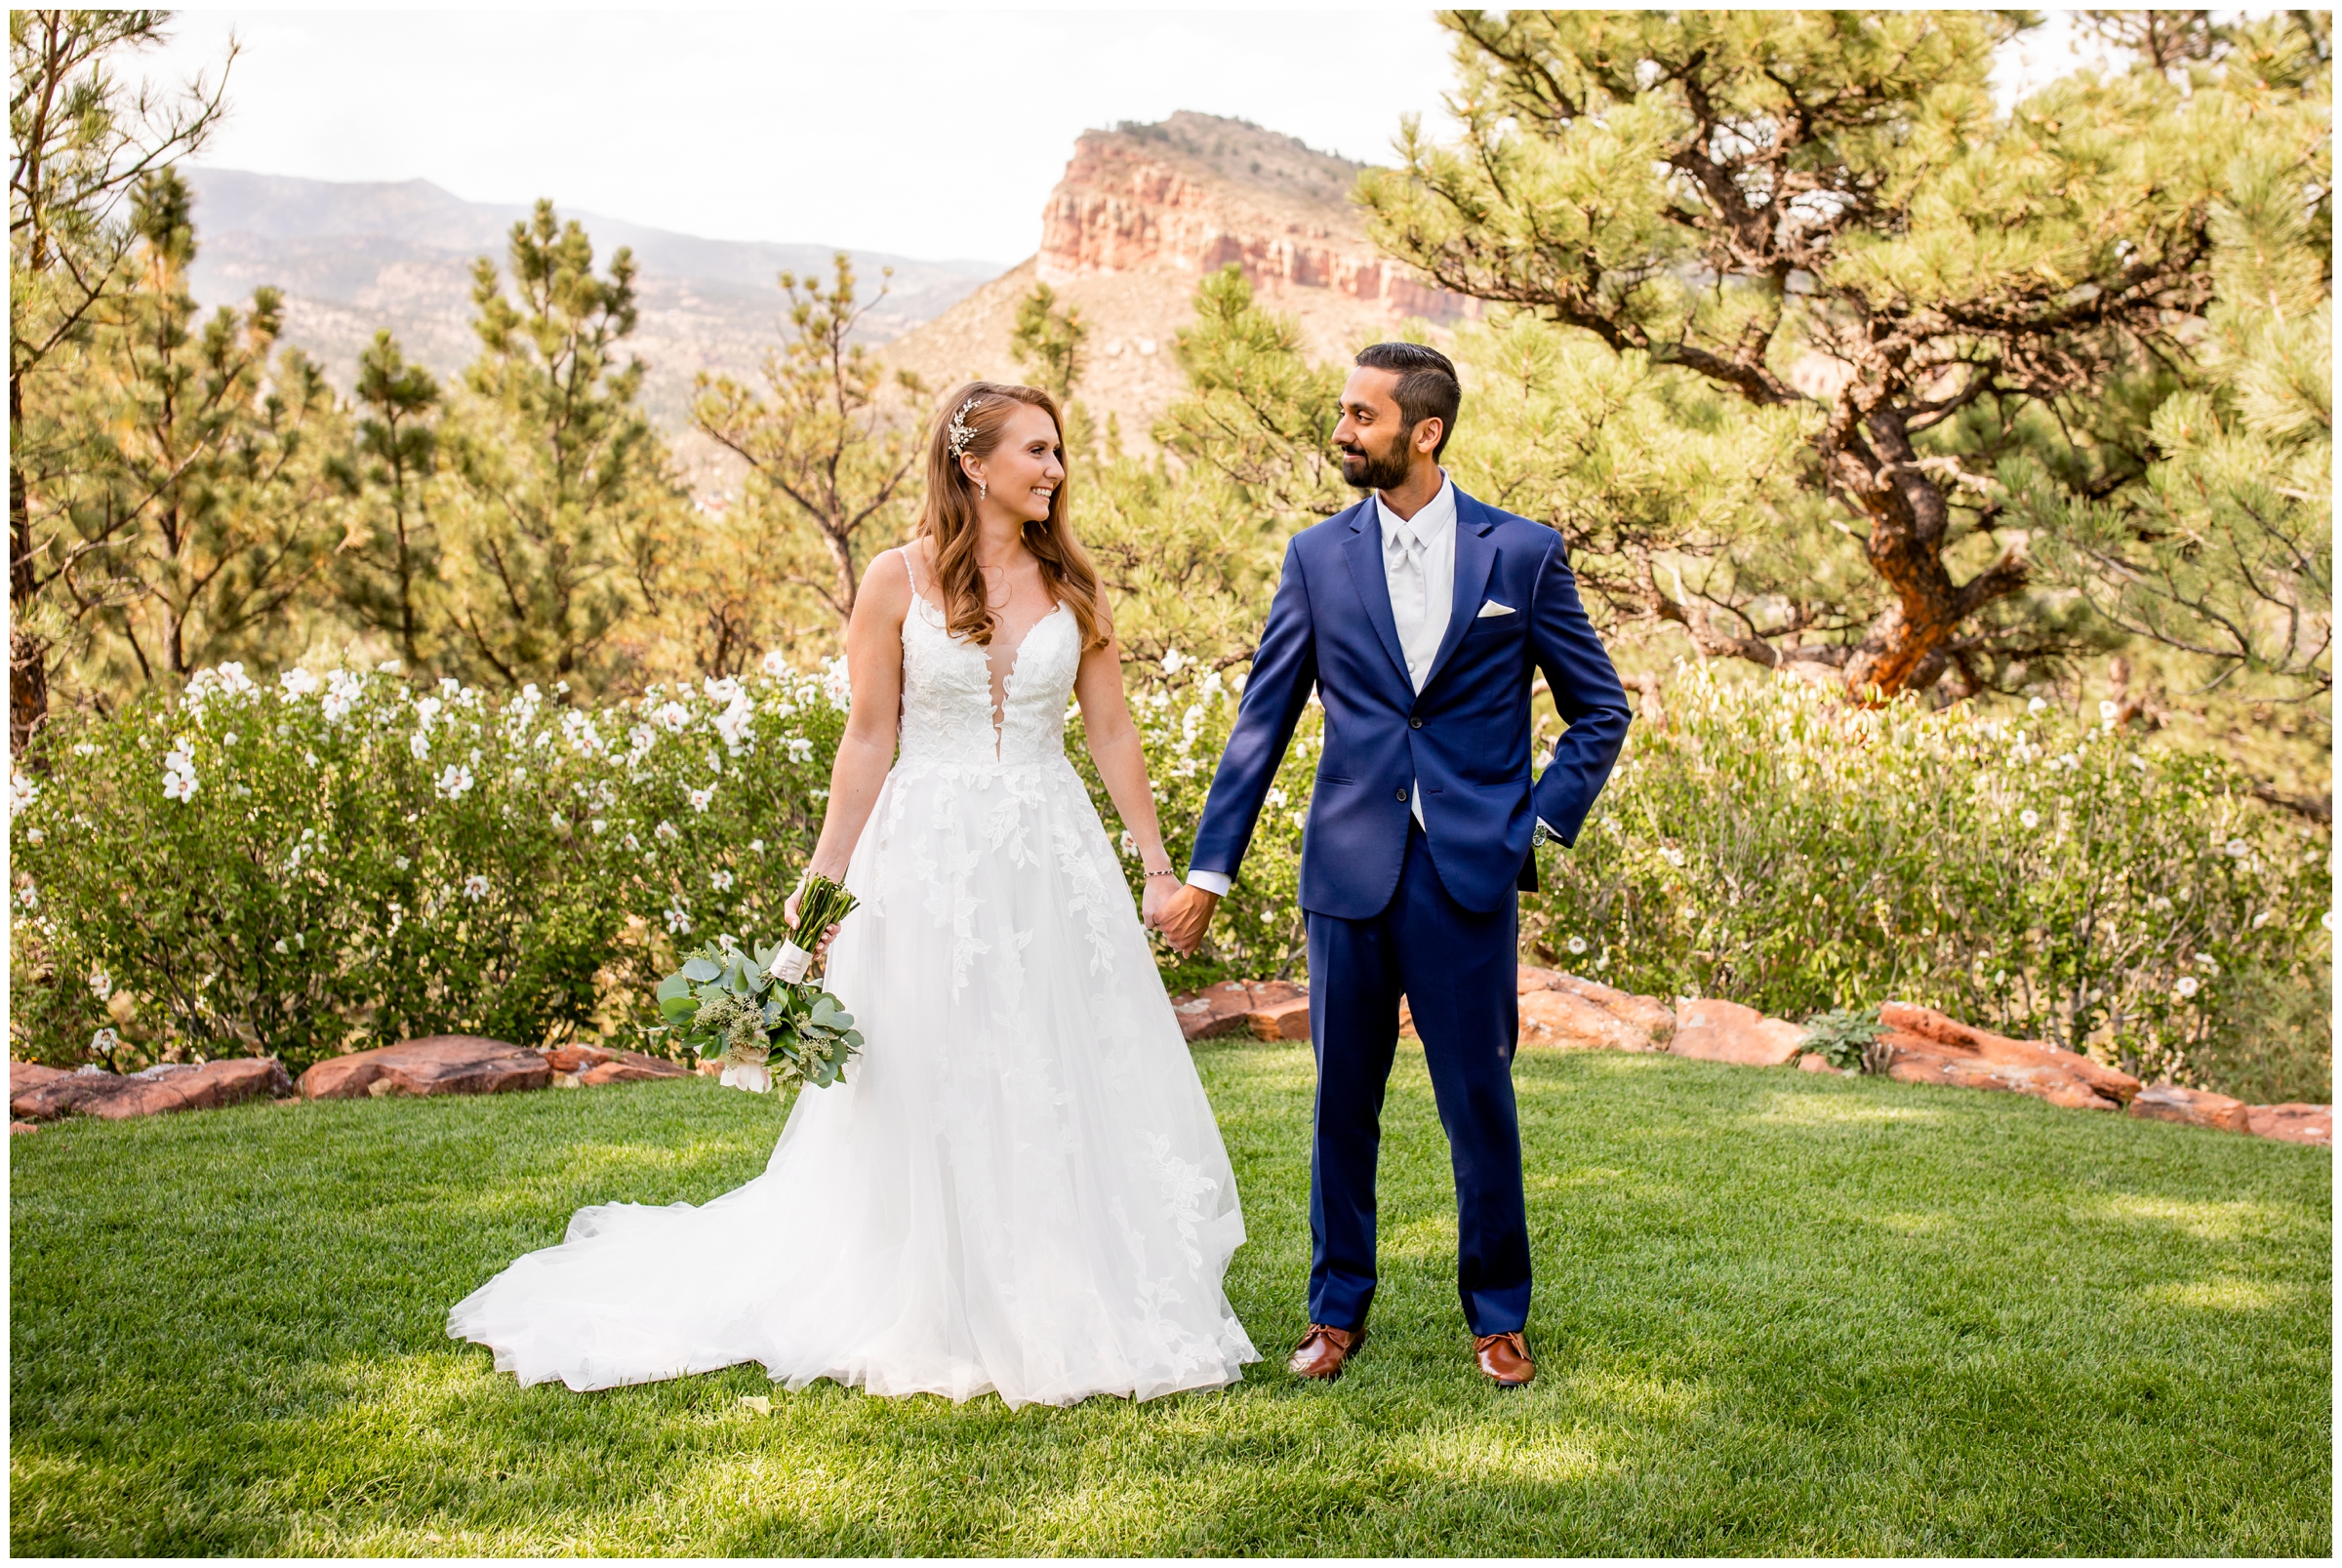 Lionscrest Manor wedding inspiration by Colorado mountain photographer Plum Pretty Photography